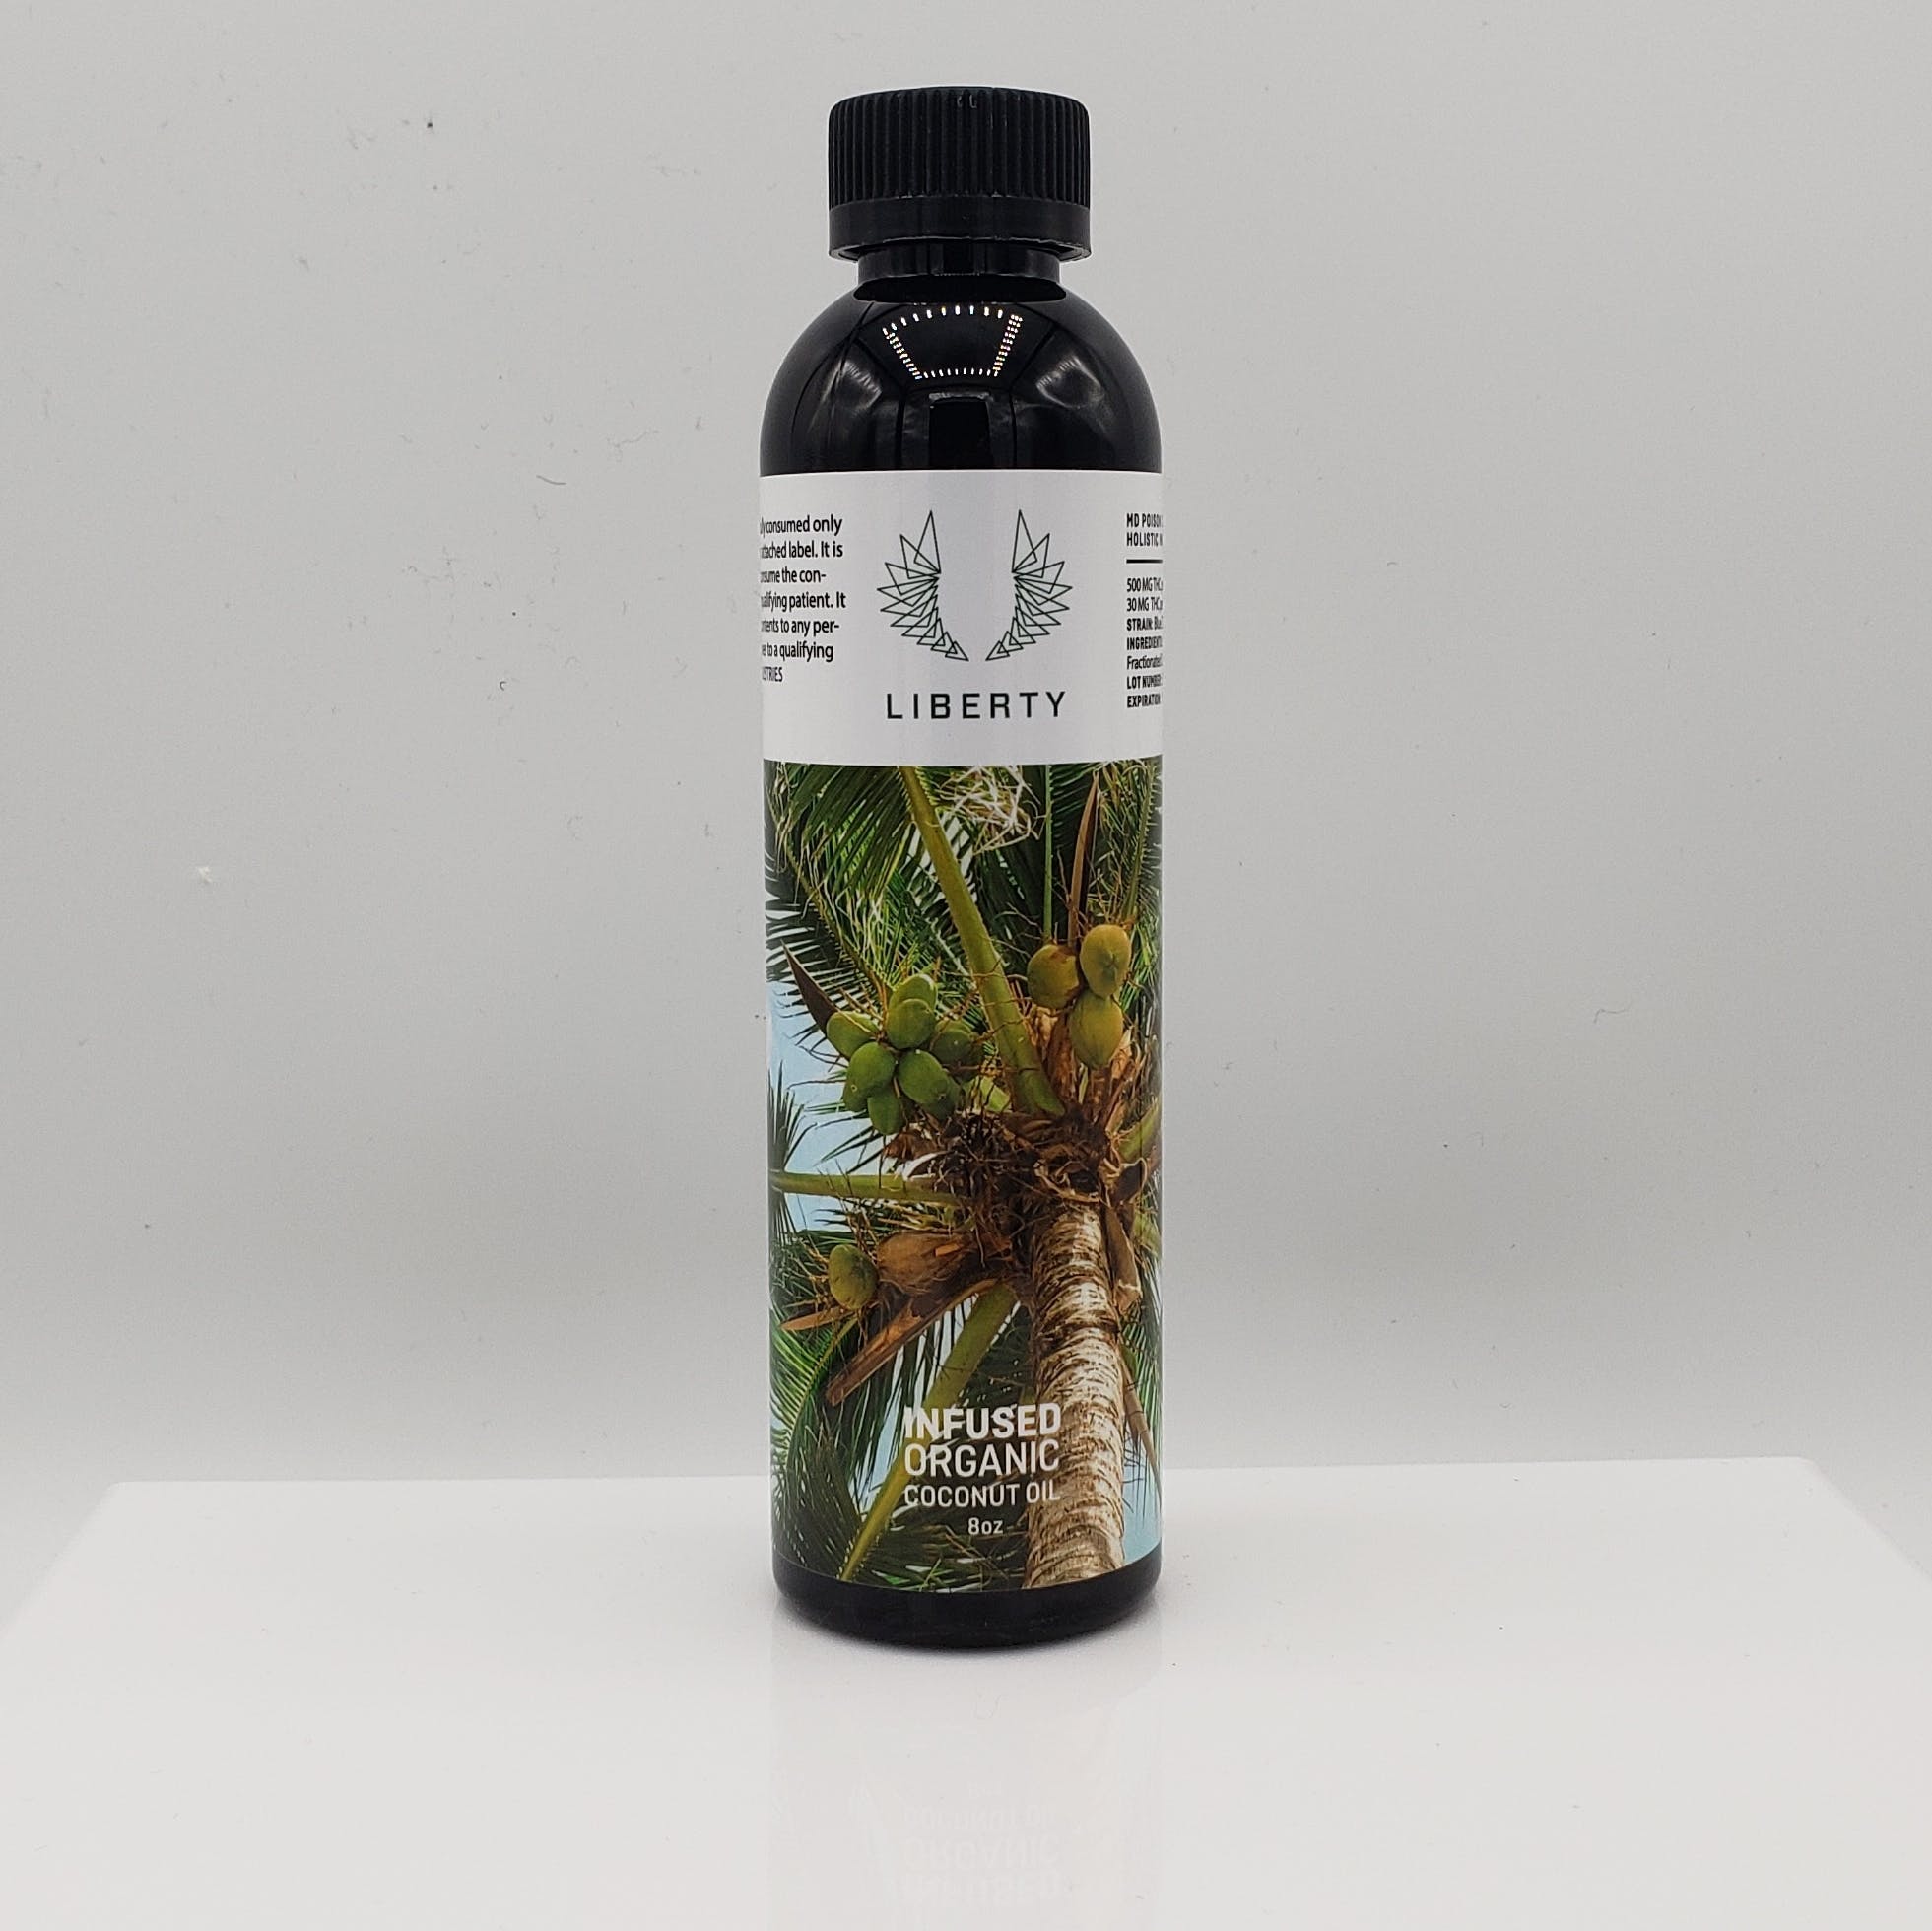 edible-liberty-infused-organic-coconut-oil